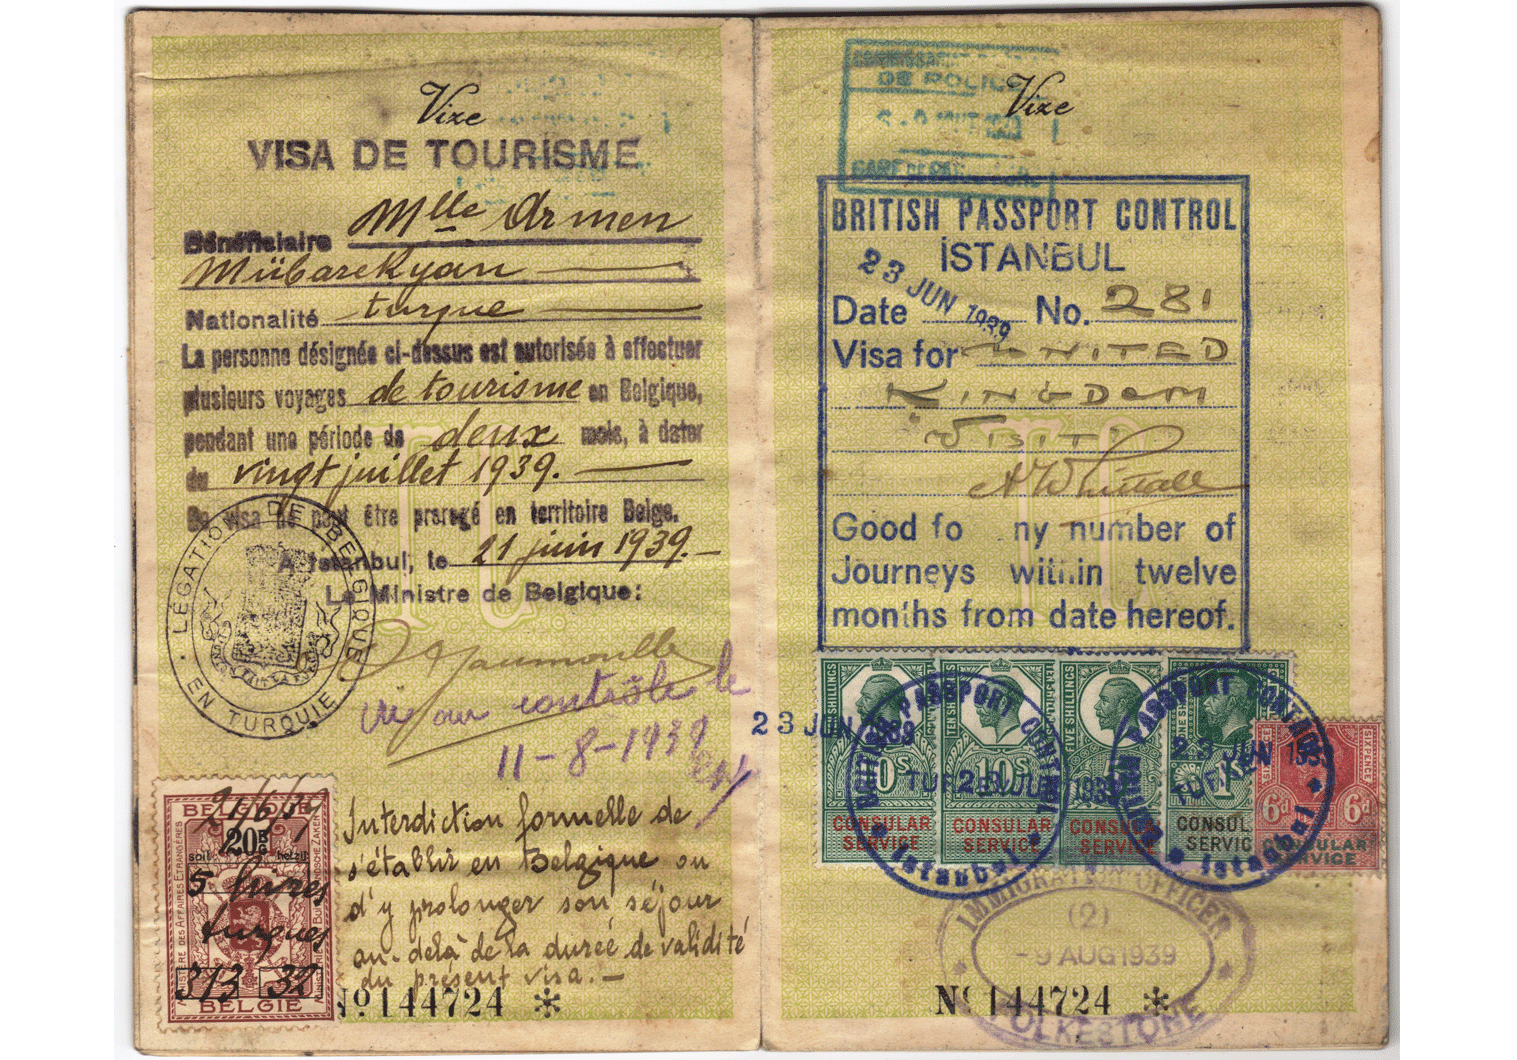 WW2 Arthur Whittall visa.